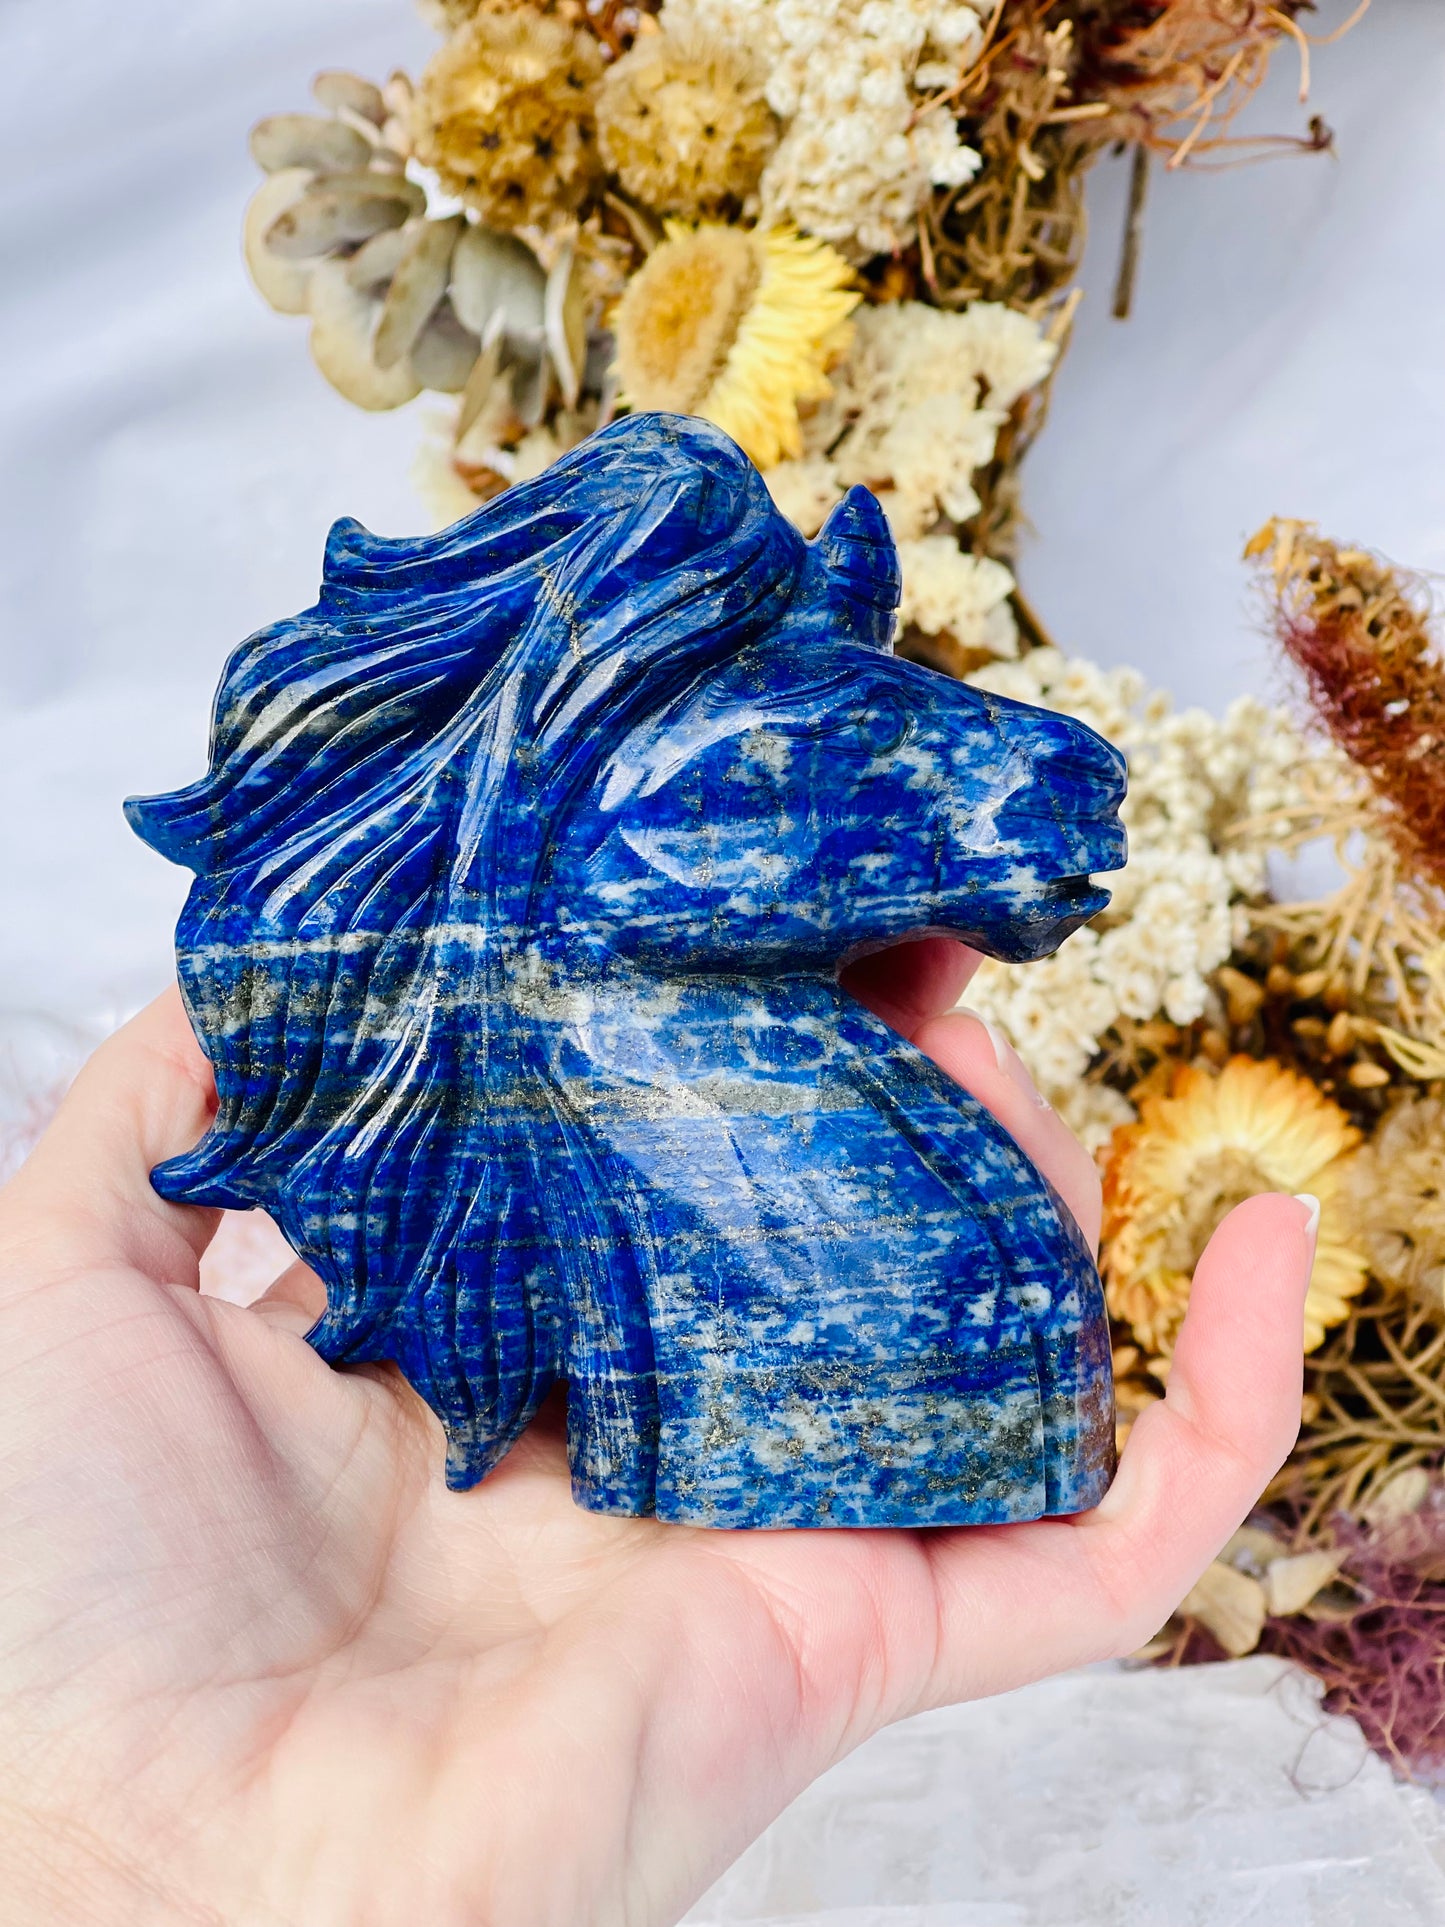 Lapis Lazuli Unicorn